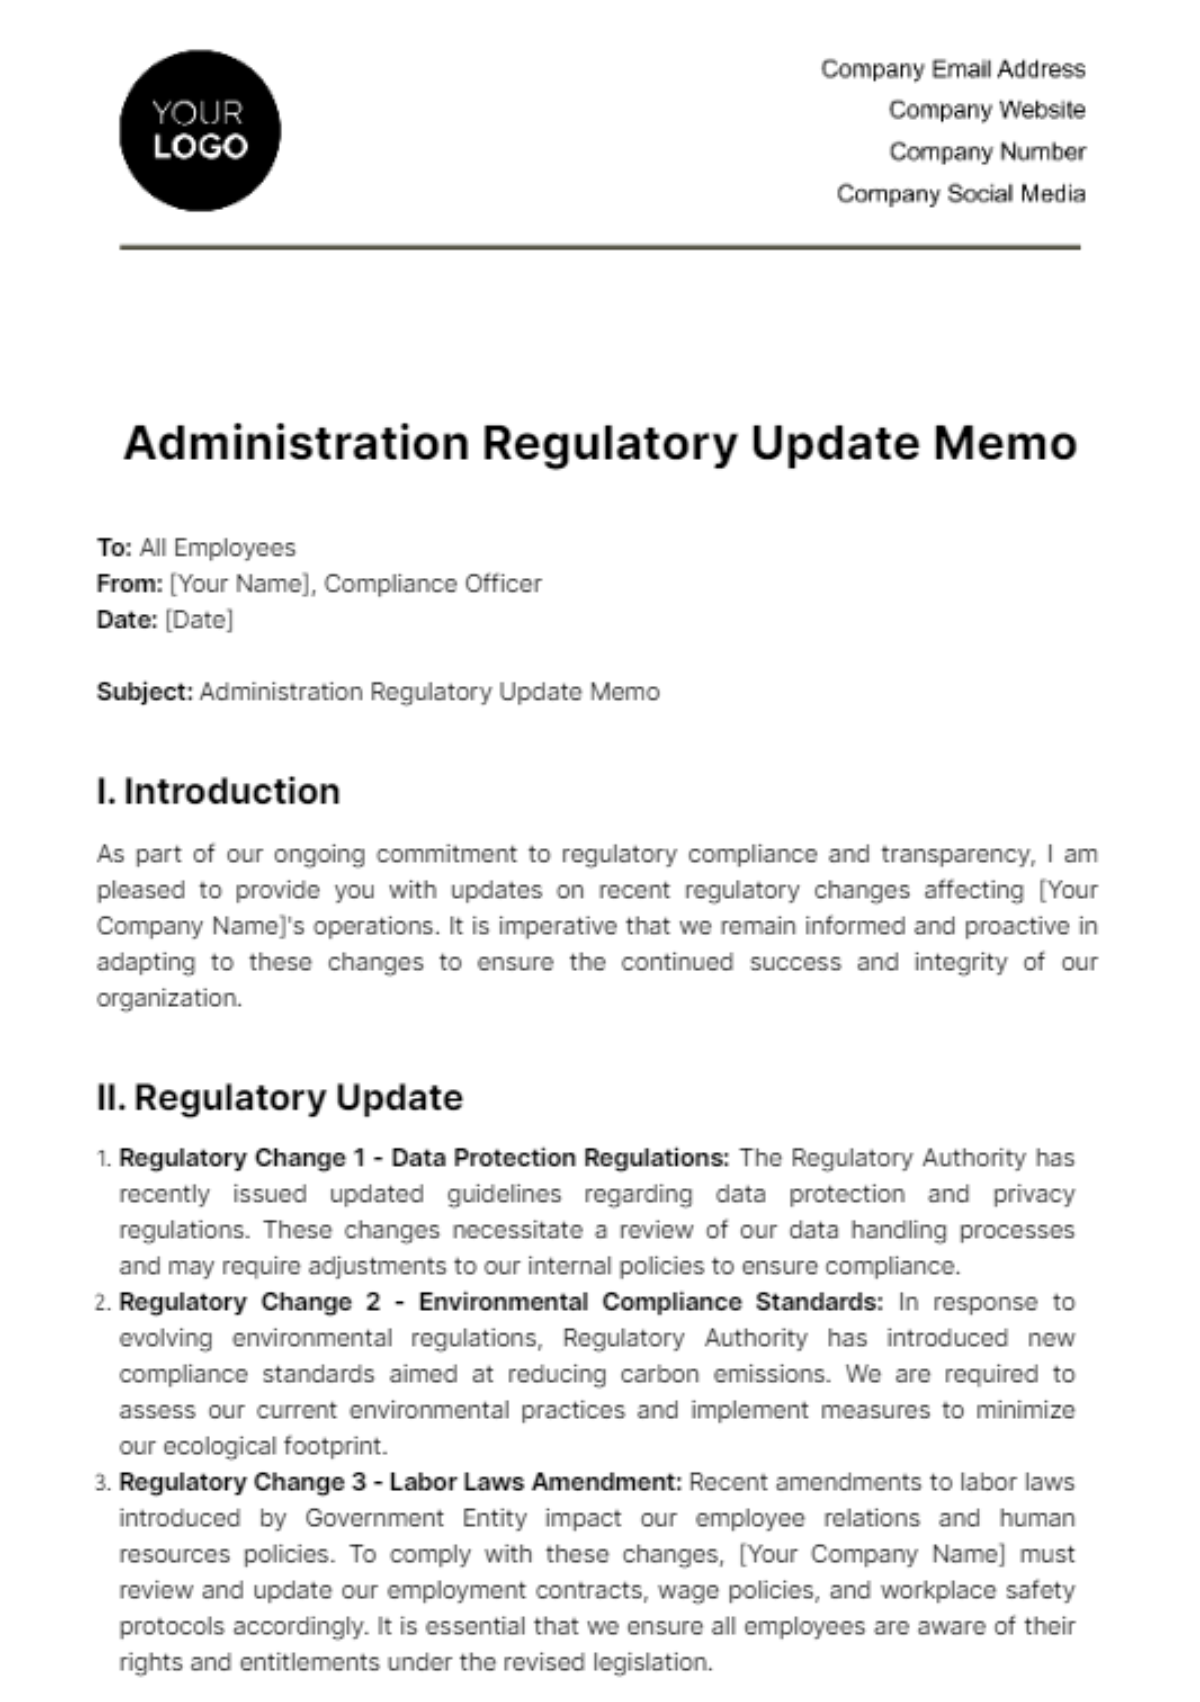 Free Administration Regulatory Update Memo Template